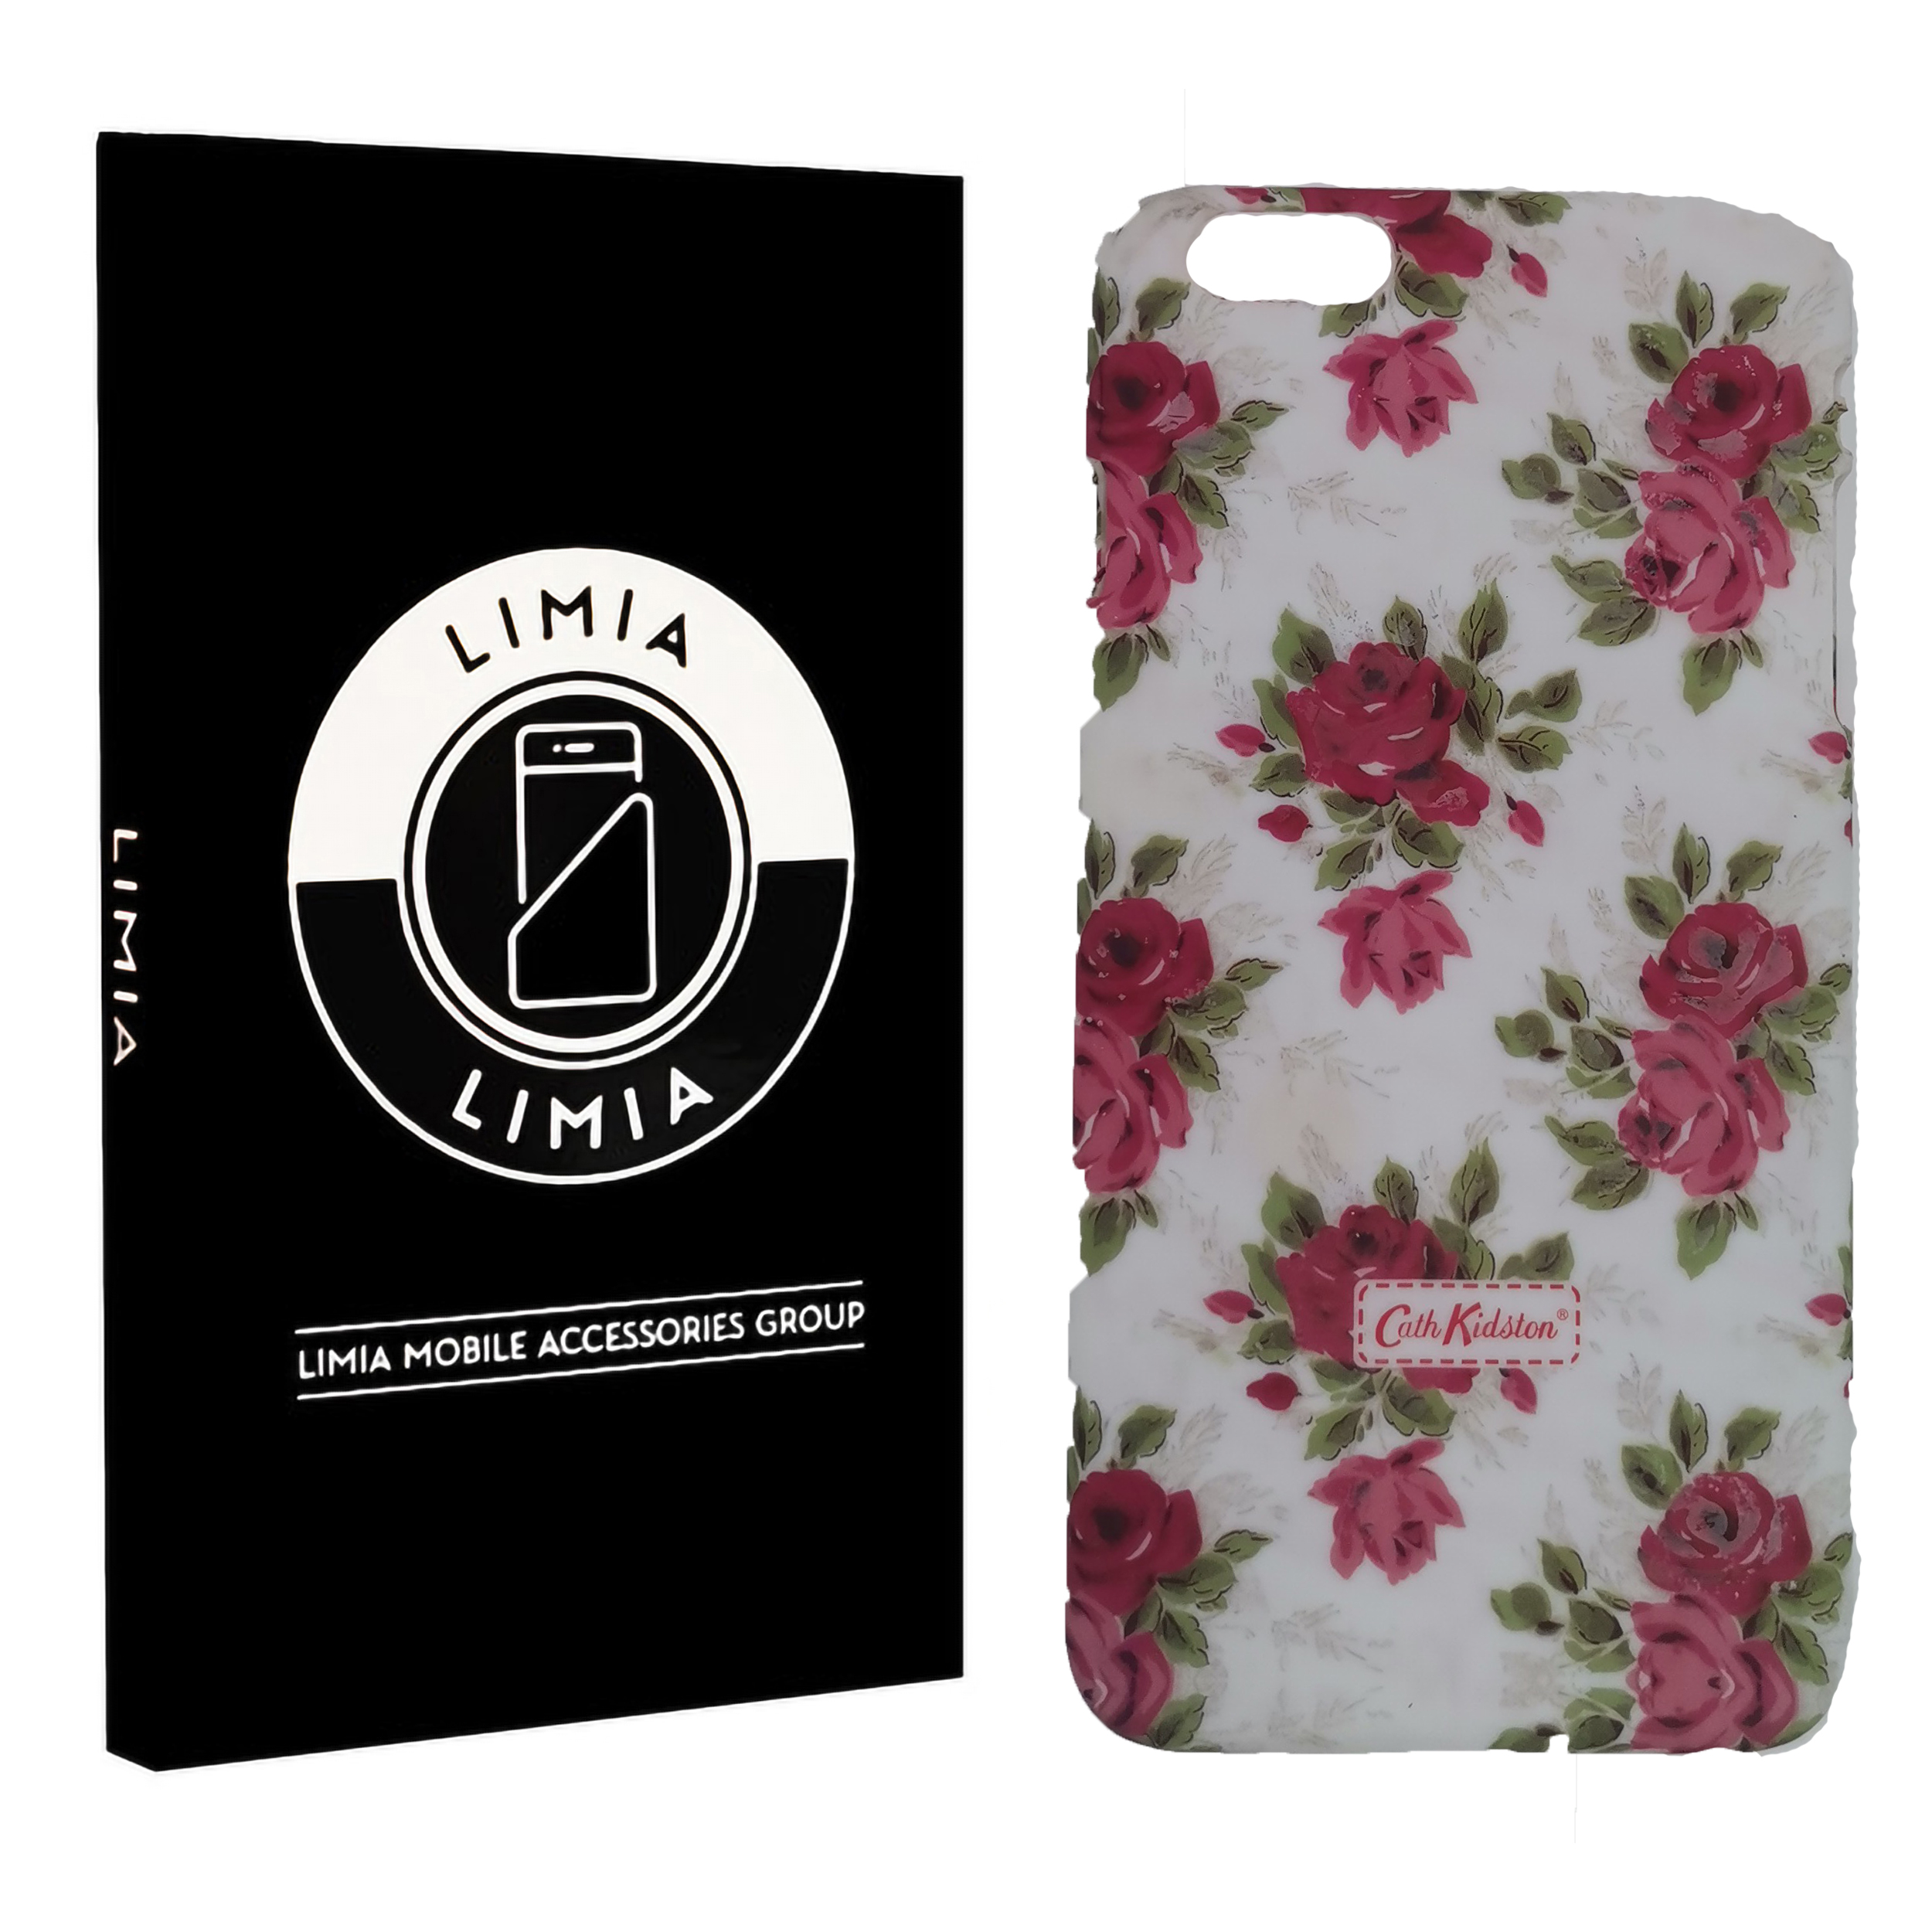 کاور لیمیا مدل کت کیتسون طرح گل مناسب برای گوشی موبایل اپل Iphone 6 Plus/6s Plus